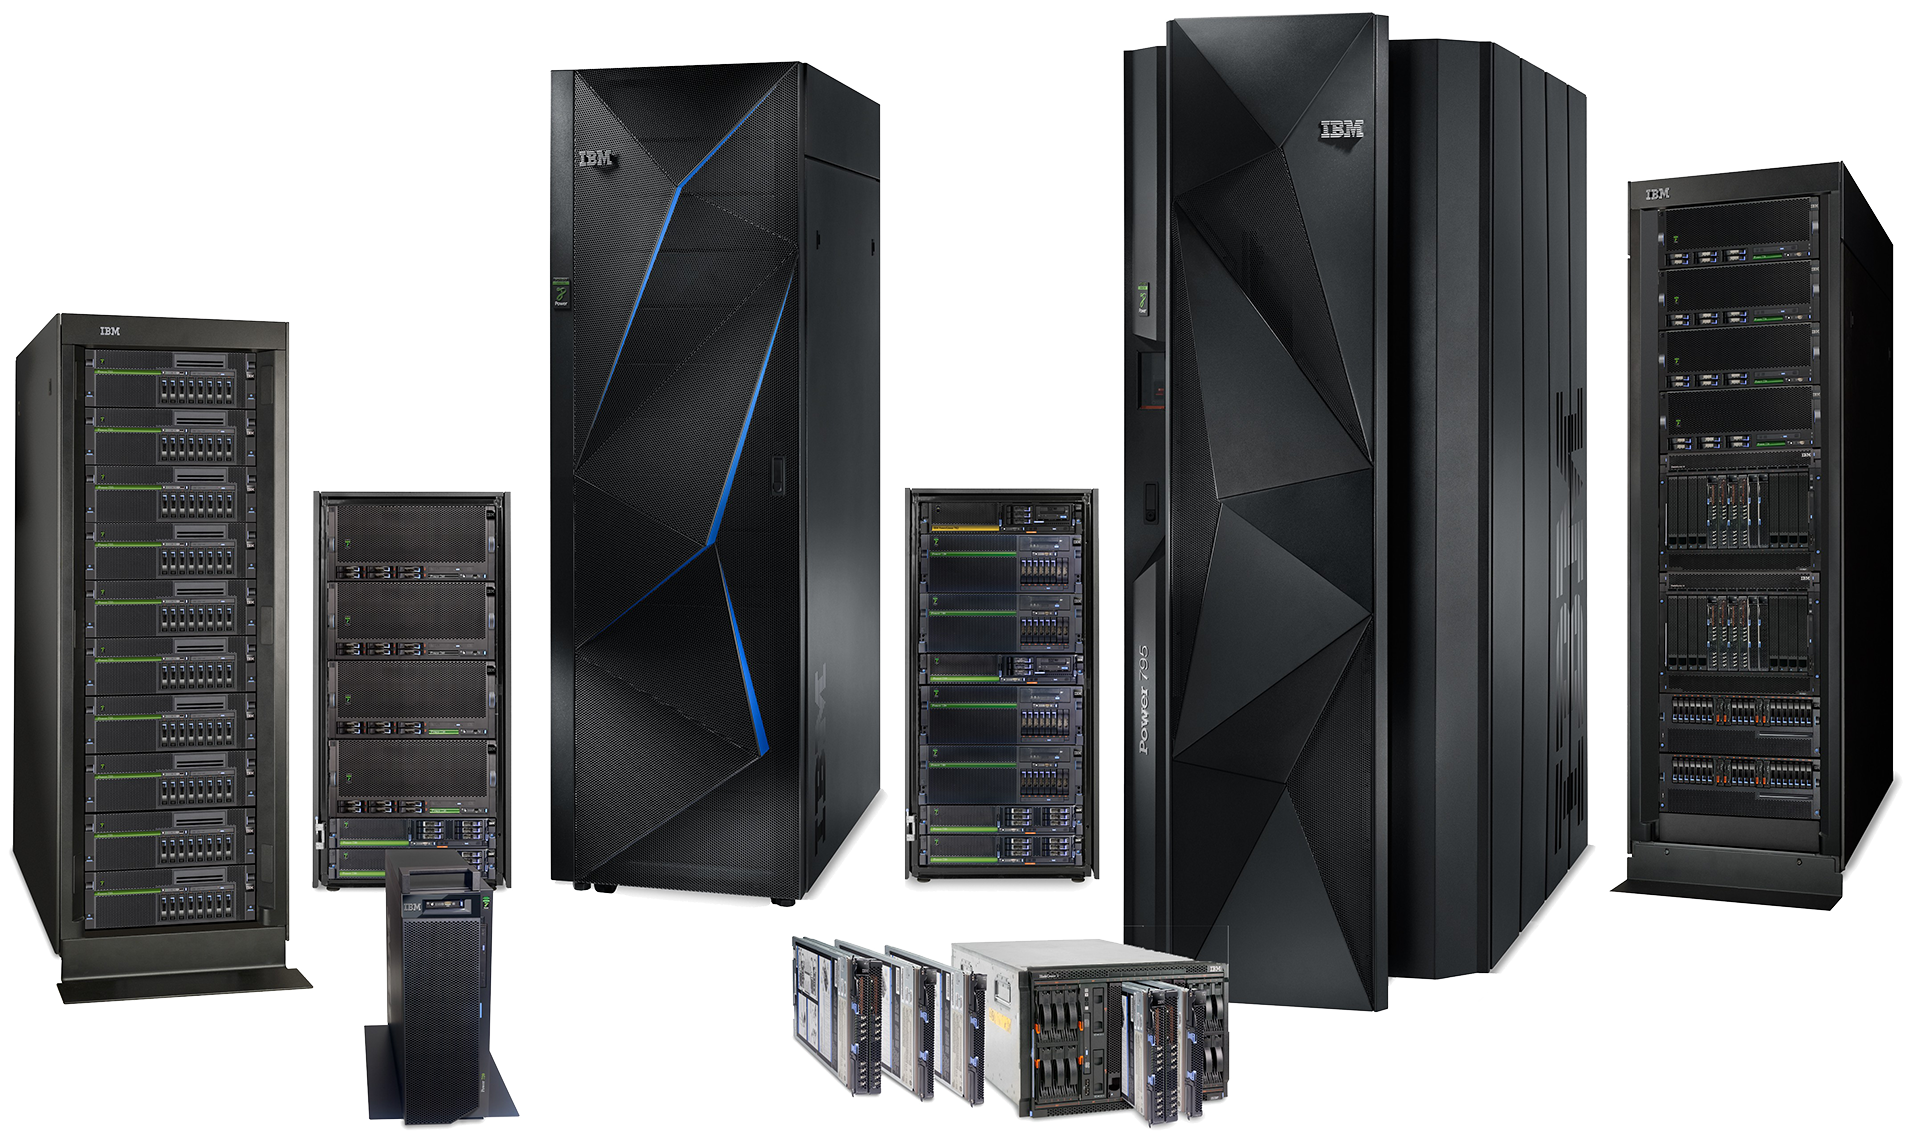 IBM Power 8 Server